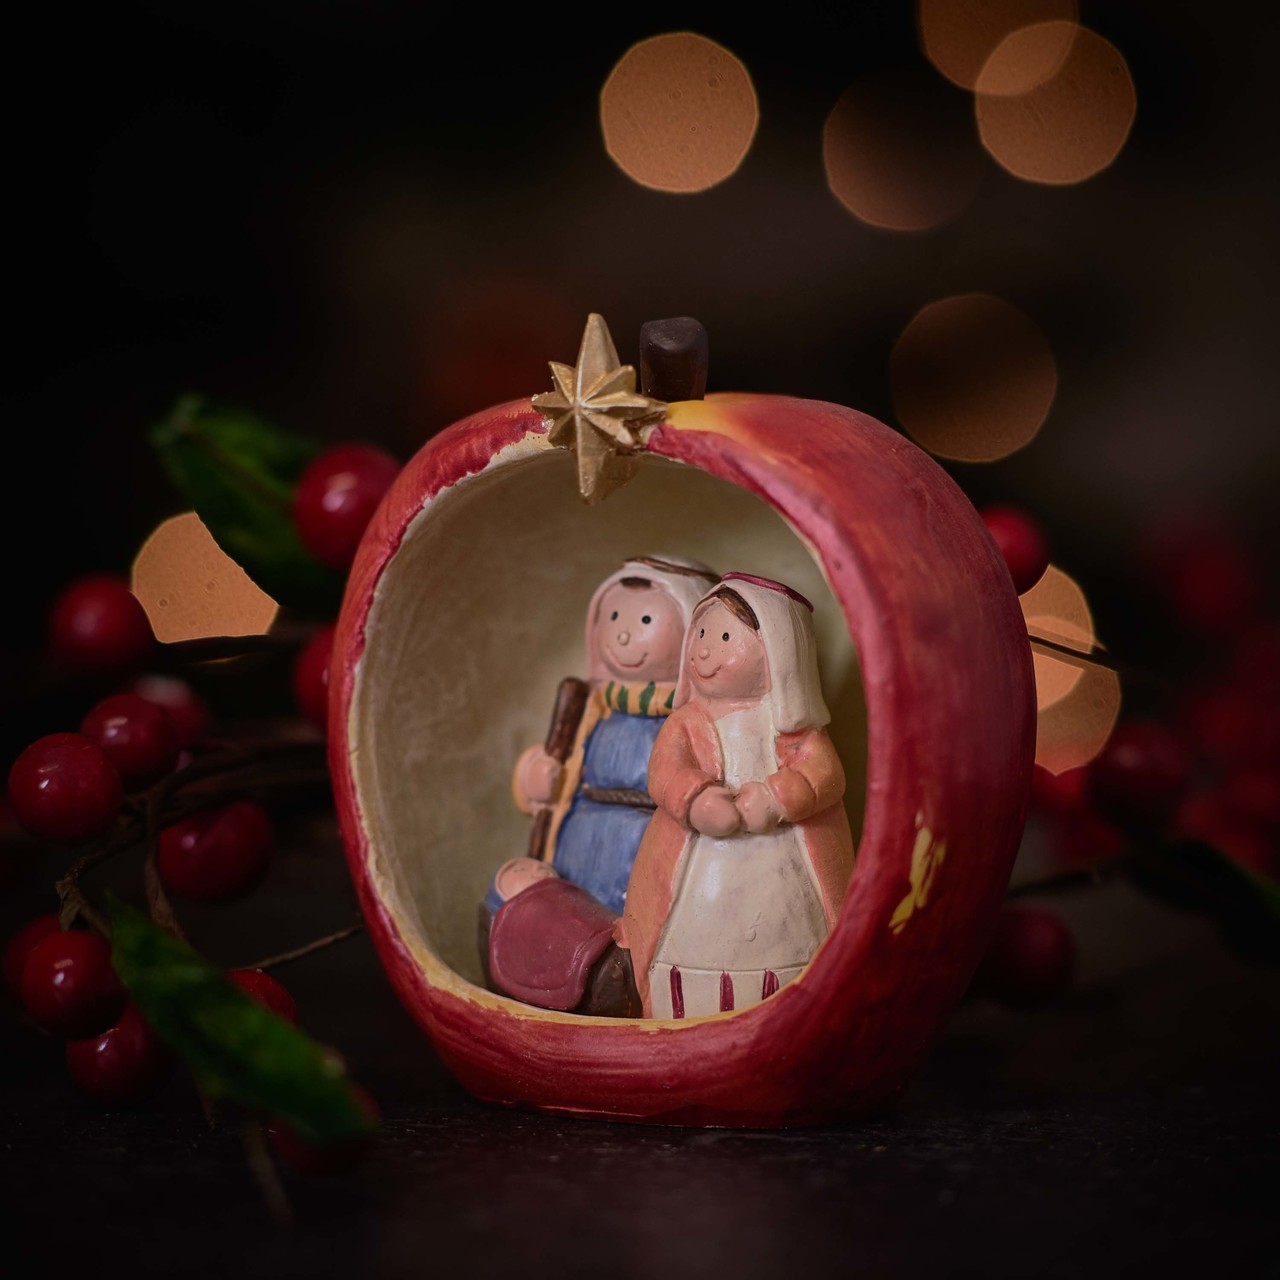 Nativity fruits mix – Apple